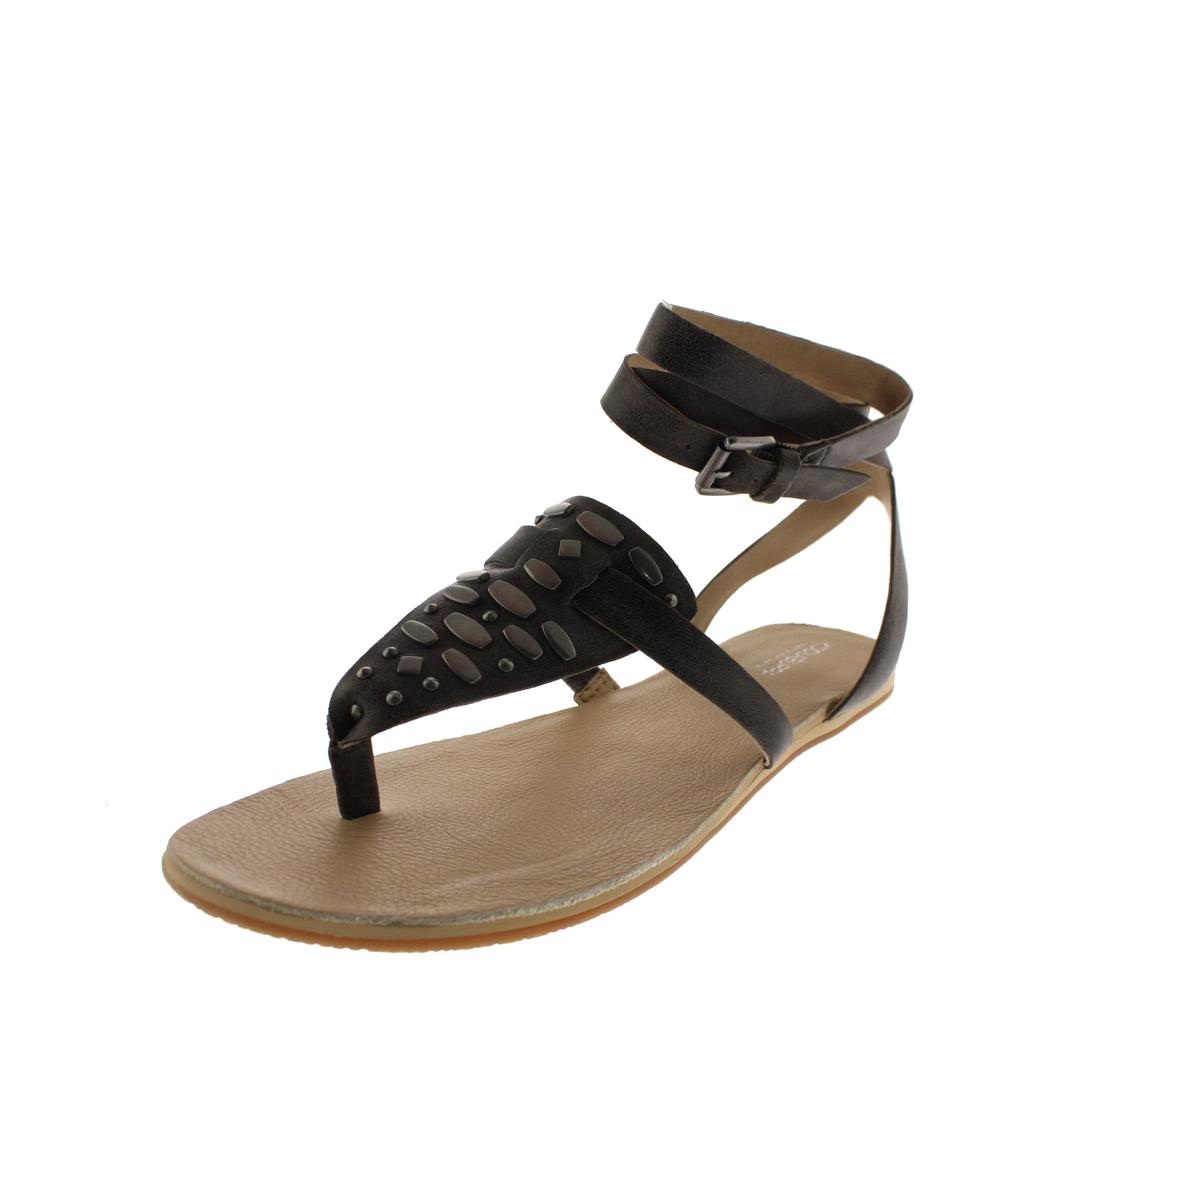 Koolaburra 3222 Womens Acacia Leather Studded Gladiator Thong Sandals ...